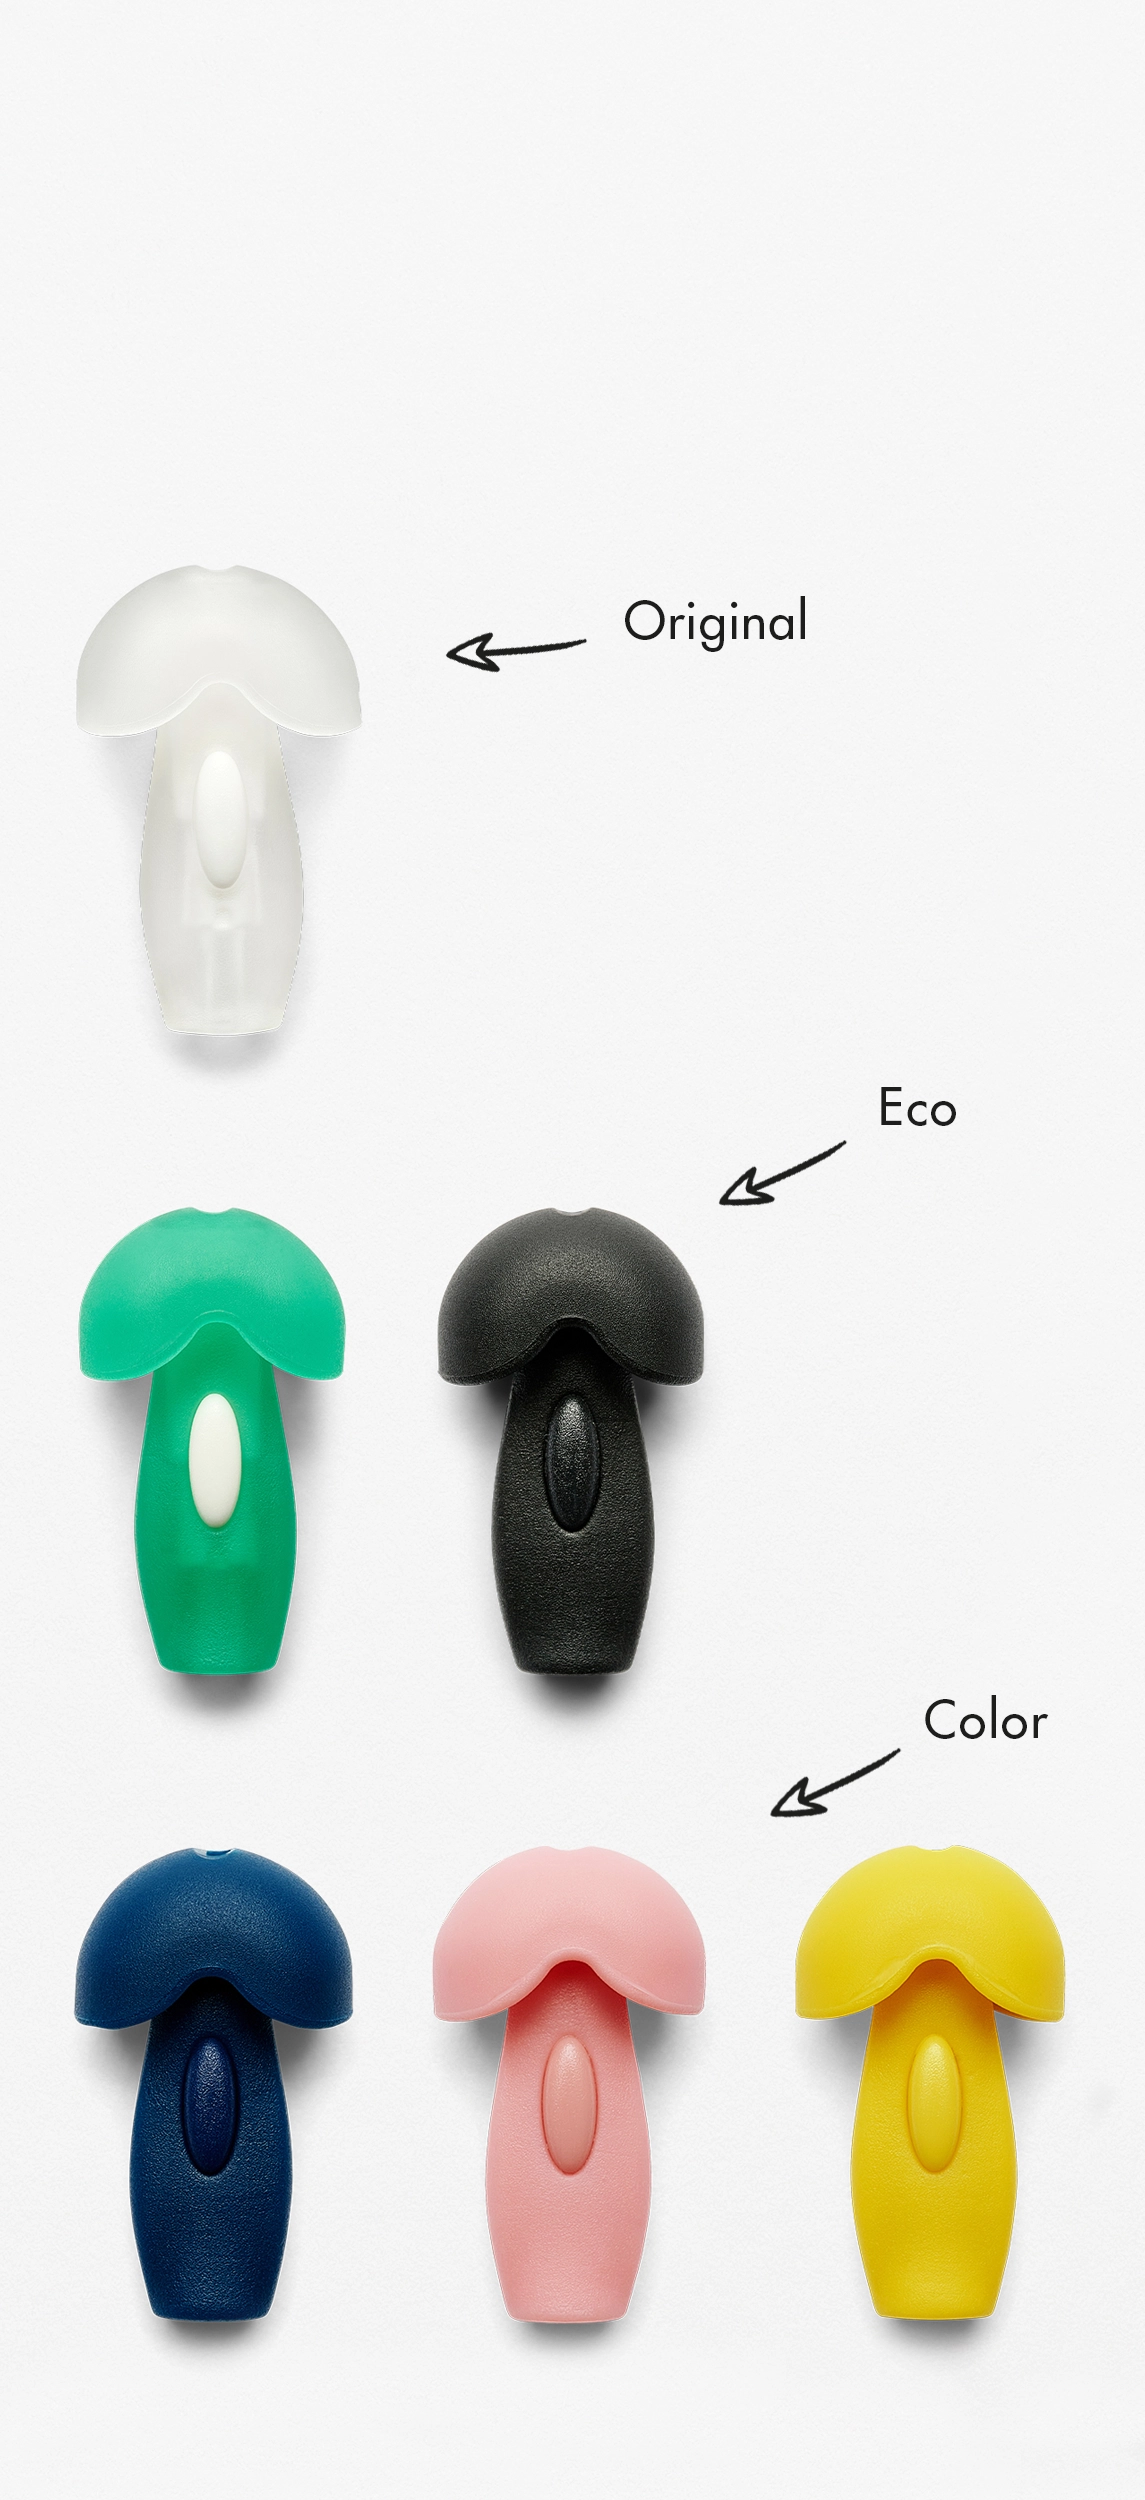 Happy Ears eco-friendly earplugs made of ocean plastics.